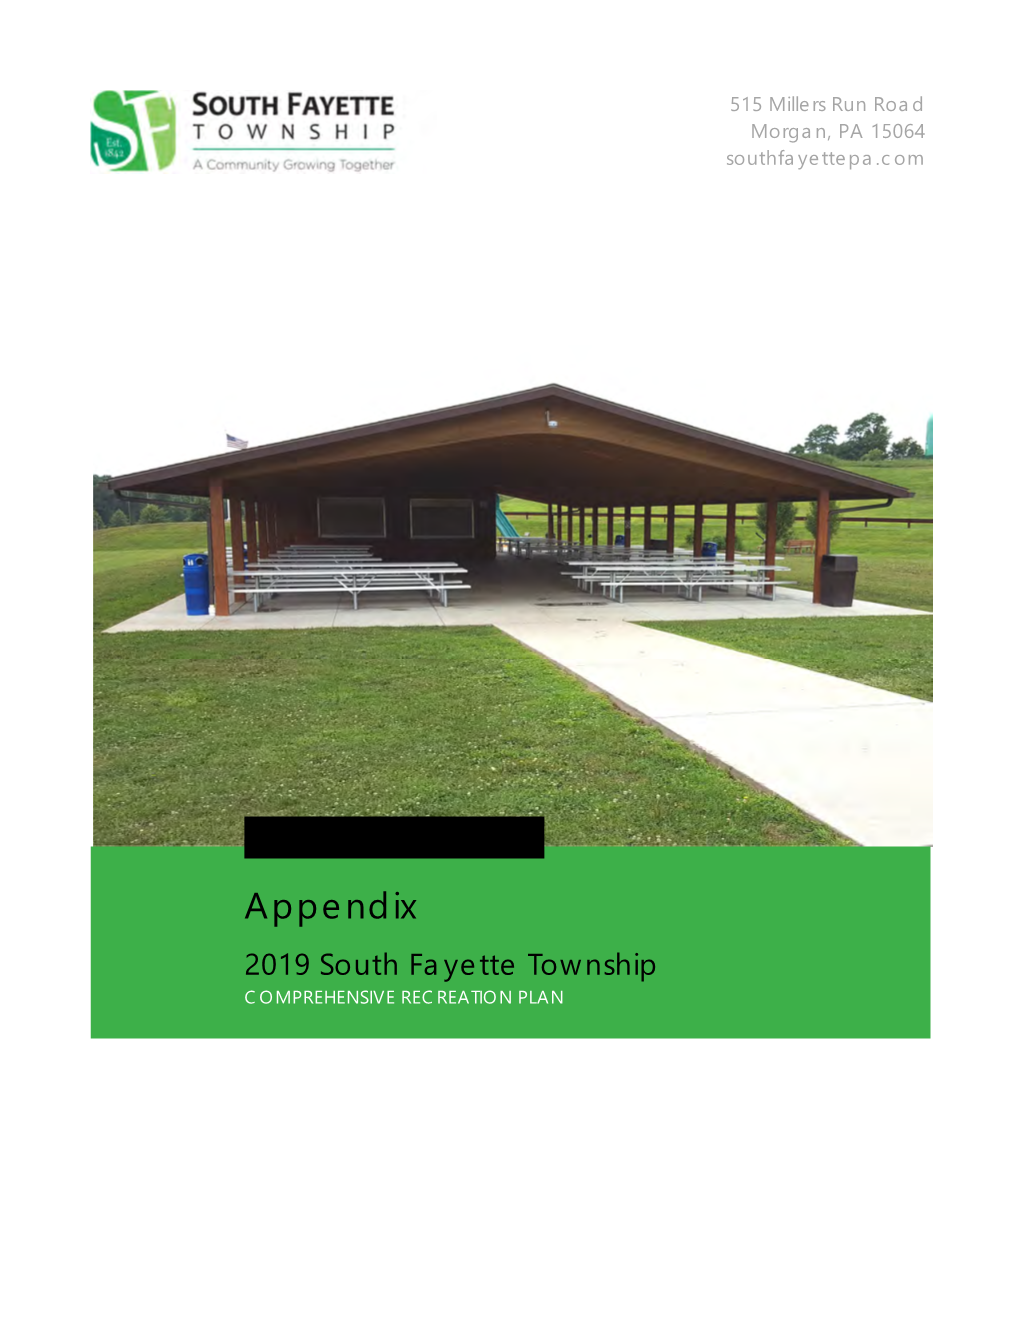 FINAL Appendix of South Fayette 2019 Comprehensive Recreation Plan